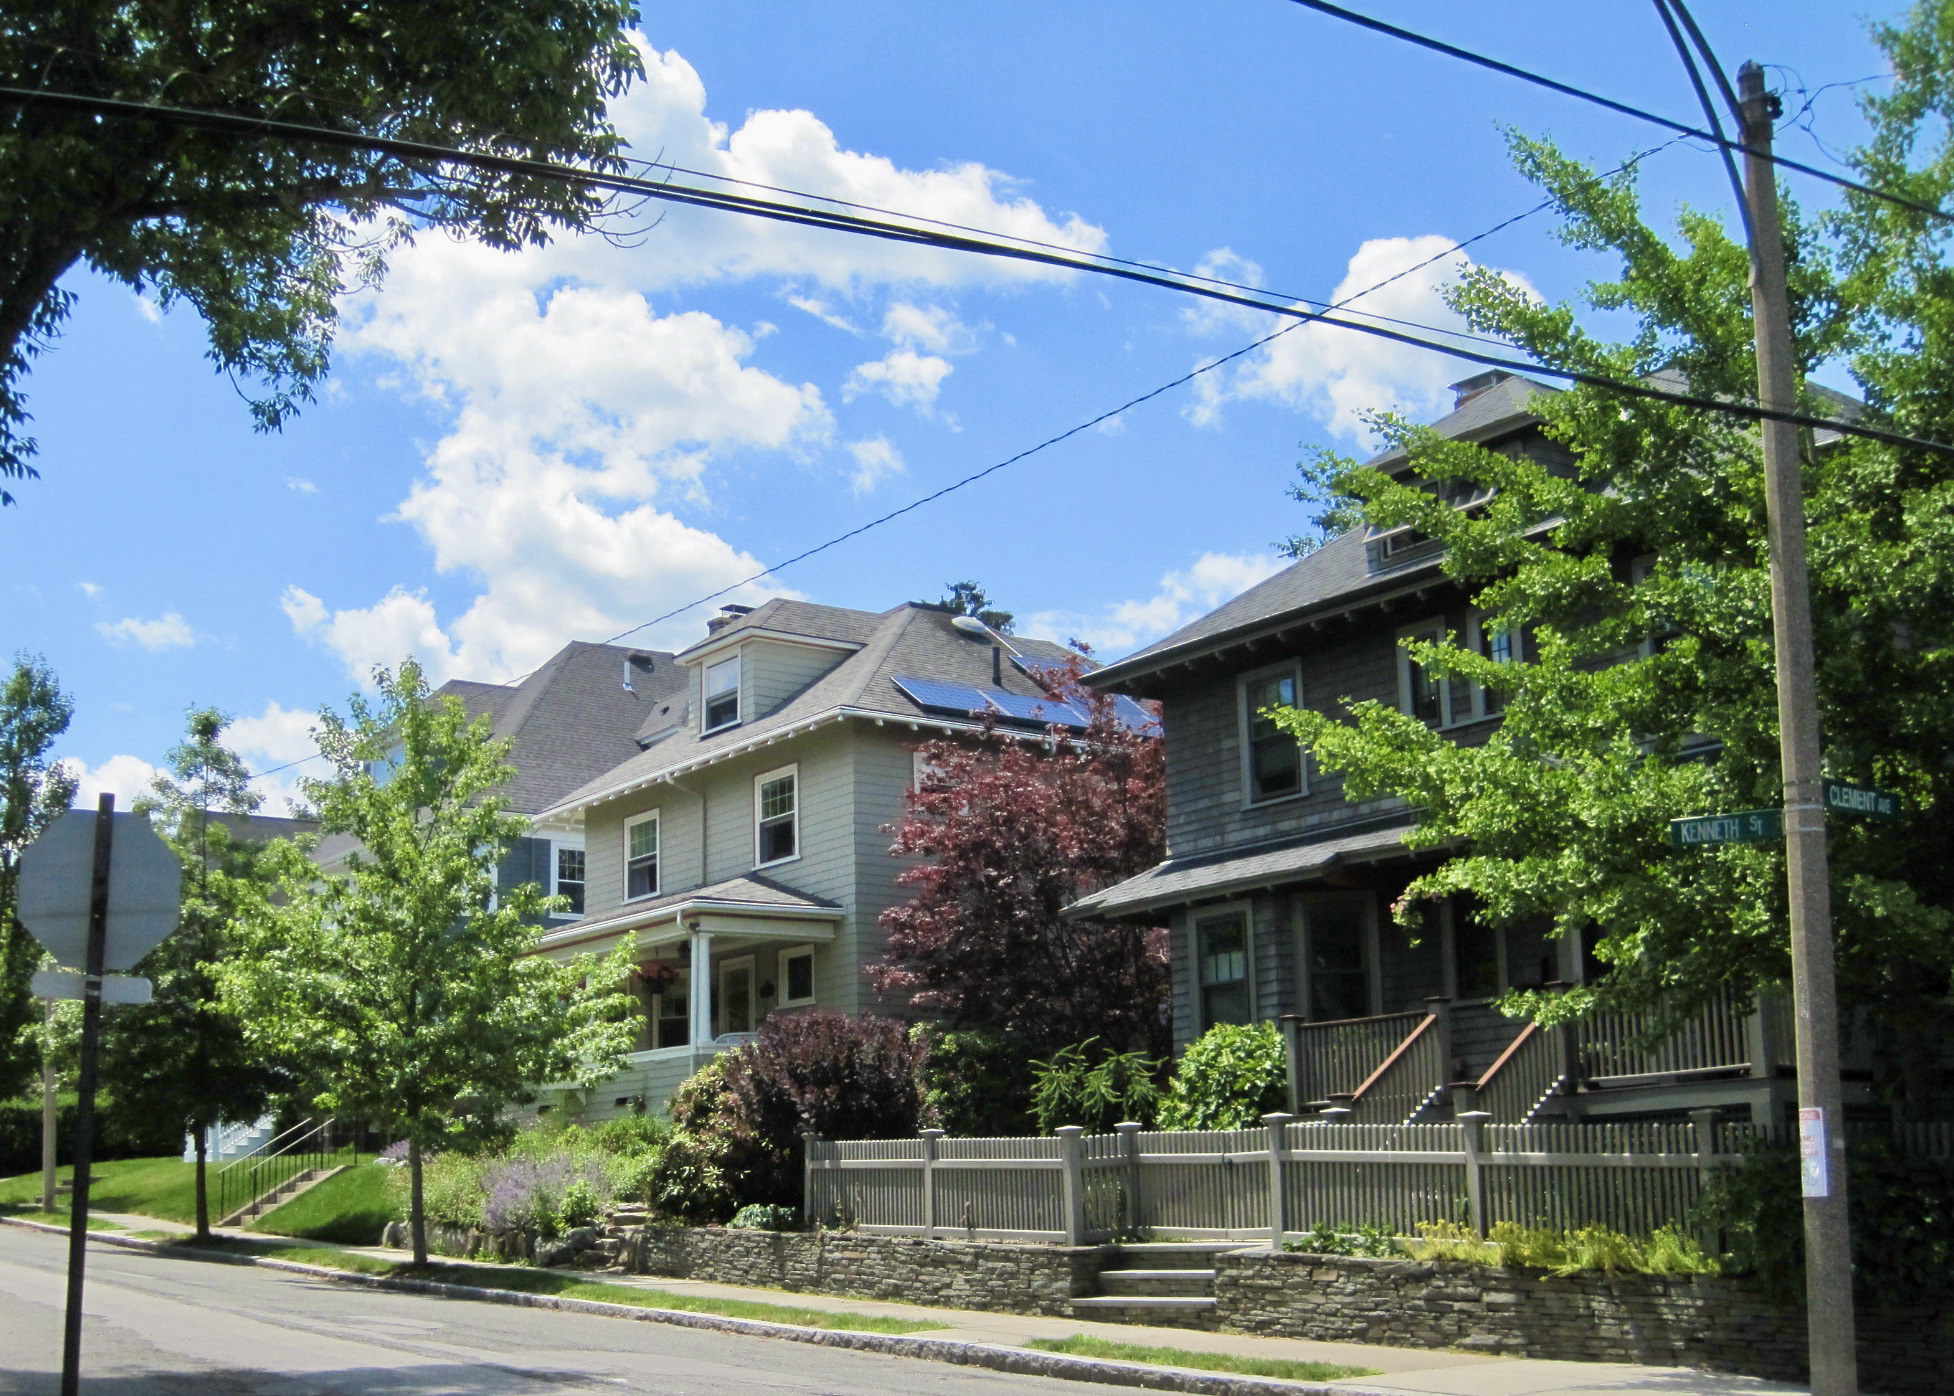 Photo of residential street in Boston's West Roxbury neighborhood